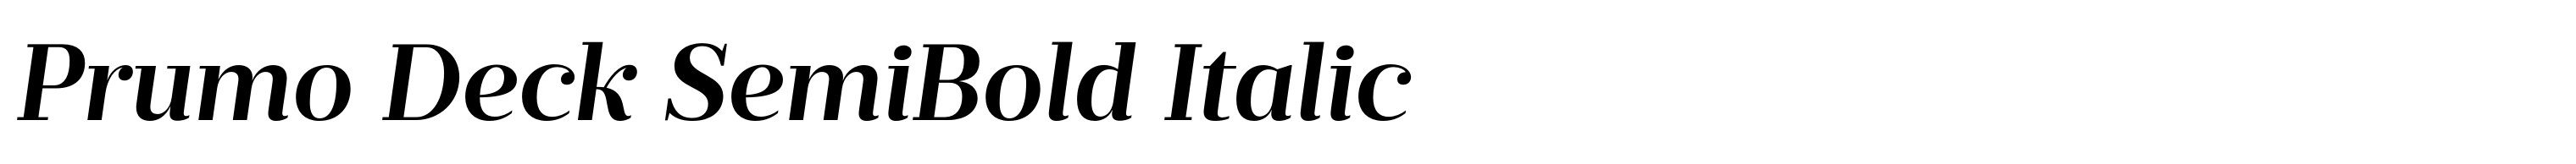 Prumo Deck SemiBold Italic